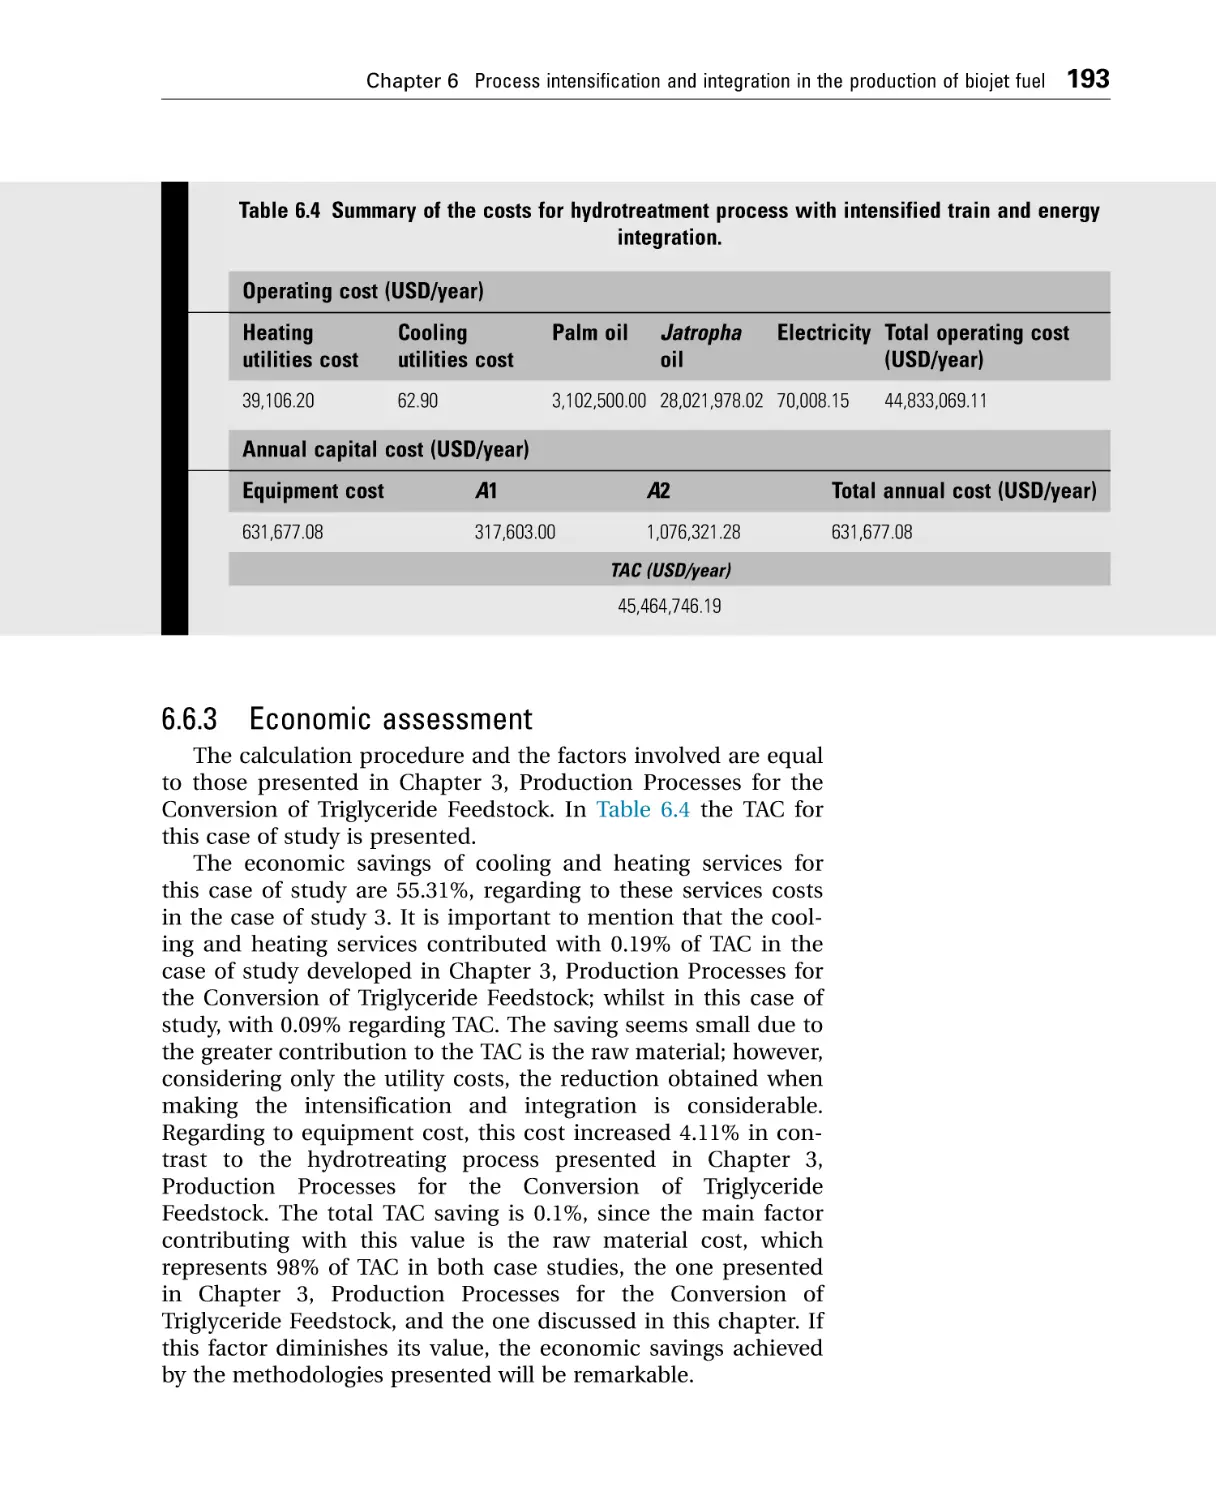 6.6.3 Economic assessment